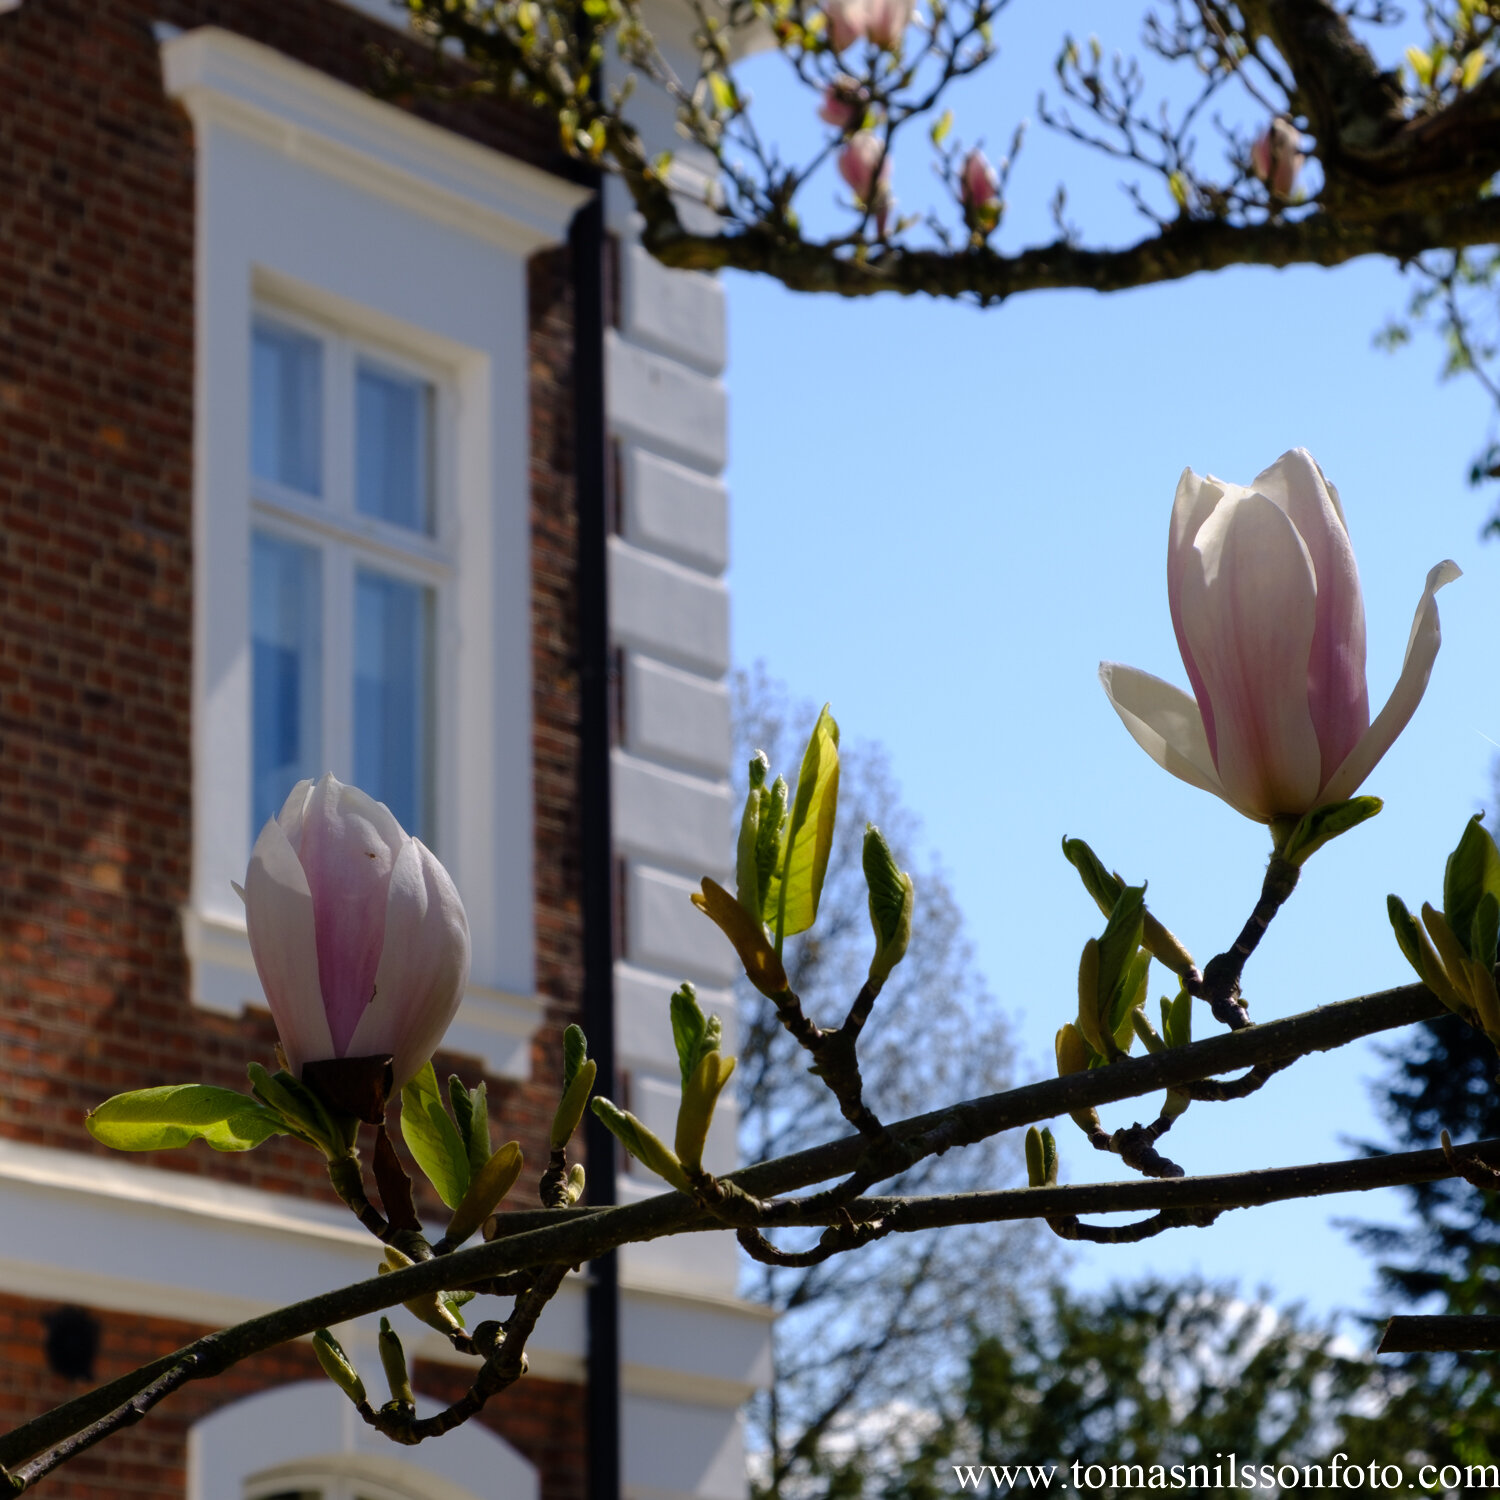 Day 117 - April 26: Magnolias